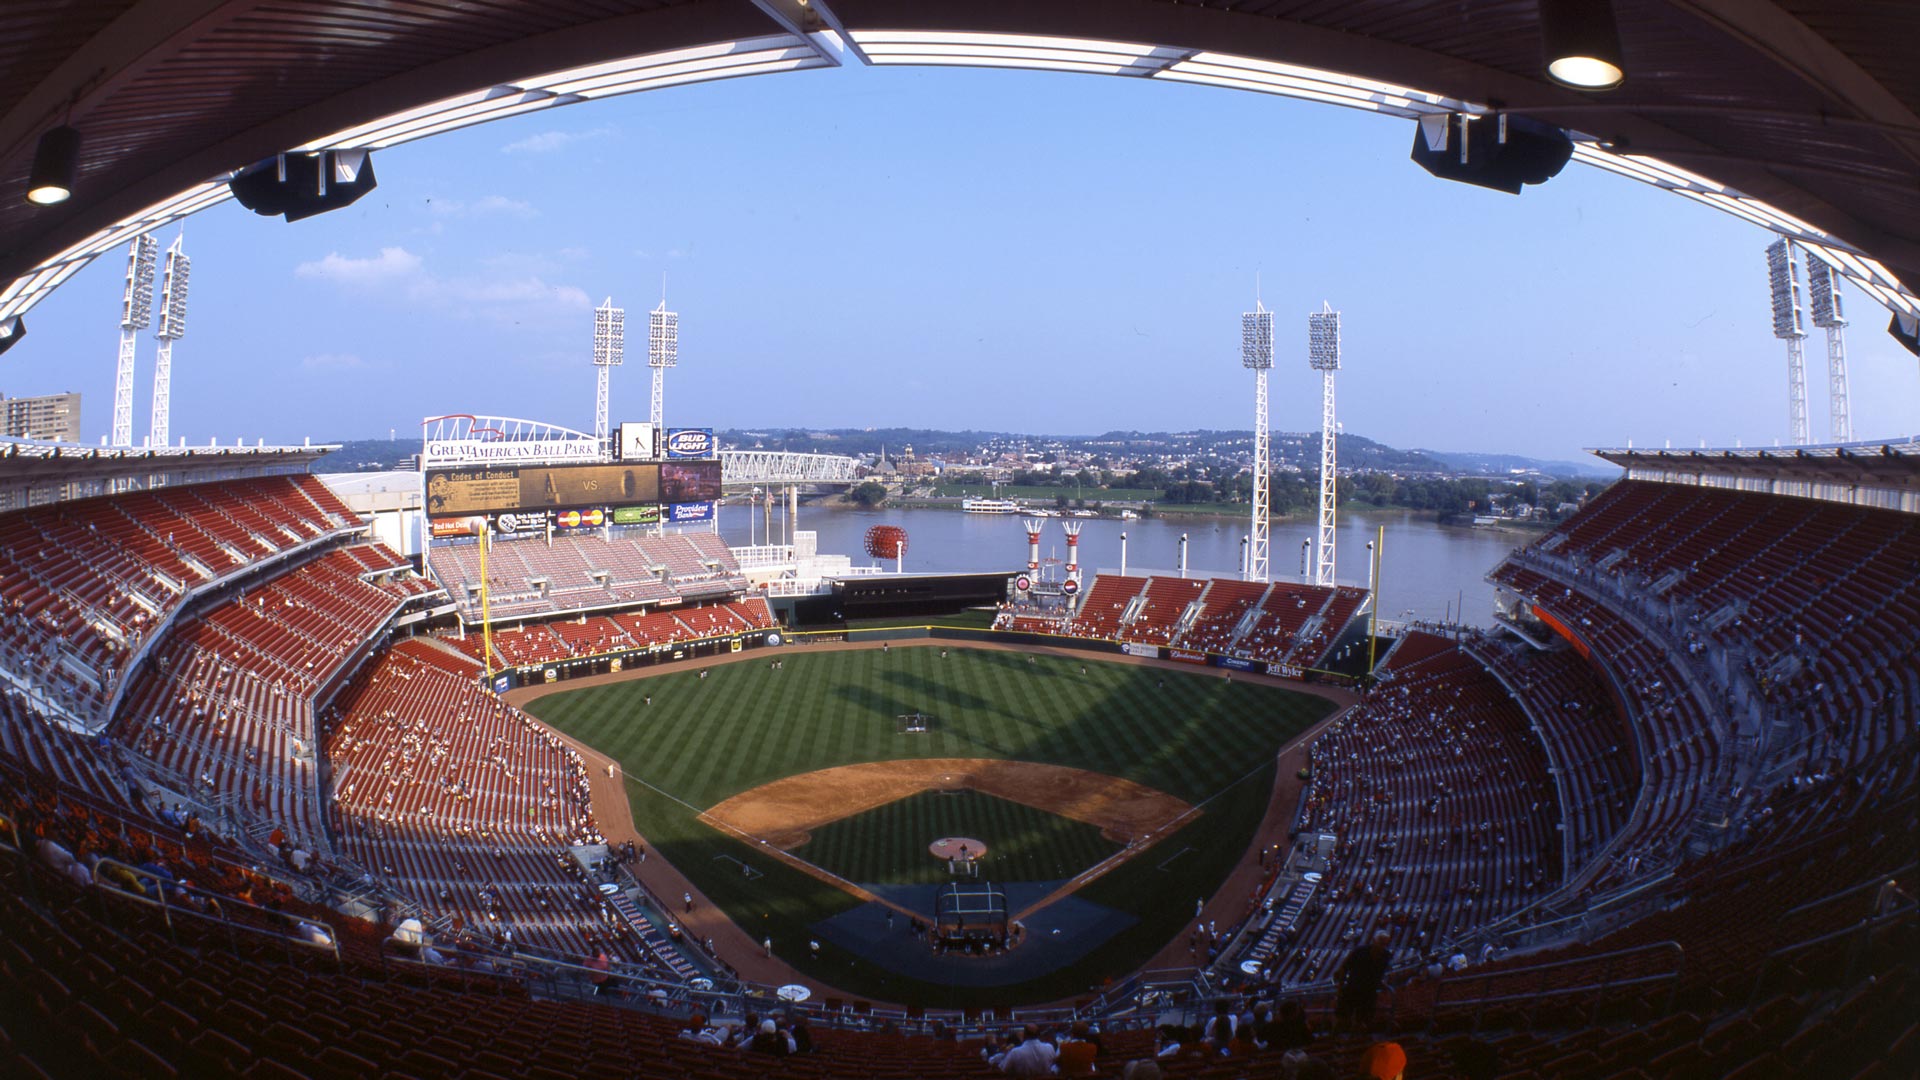 Great American Ballpark - Baseball in Stadiums